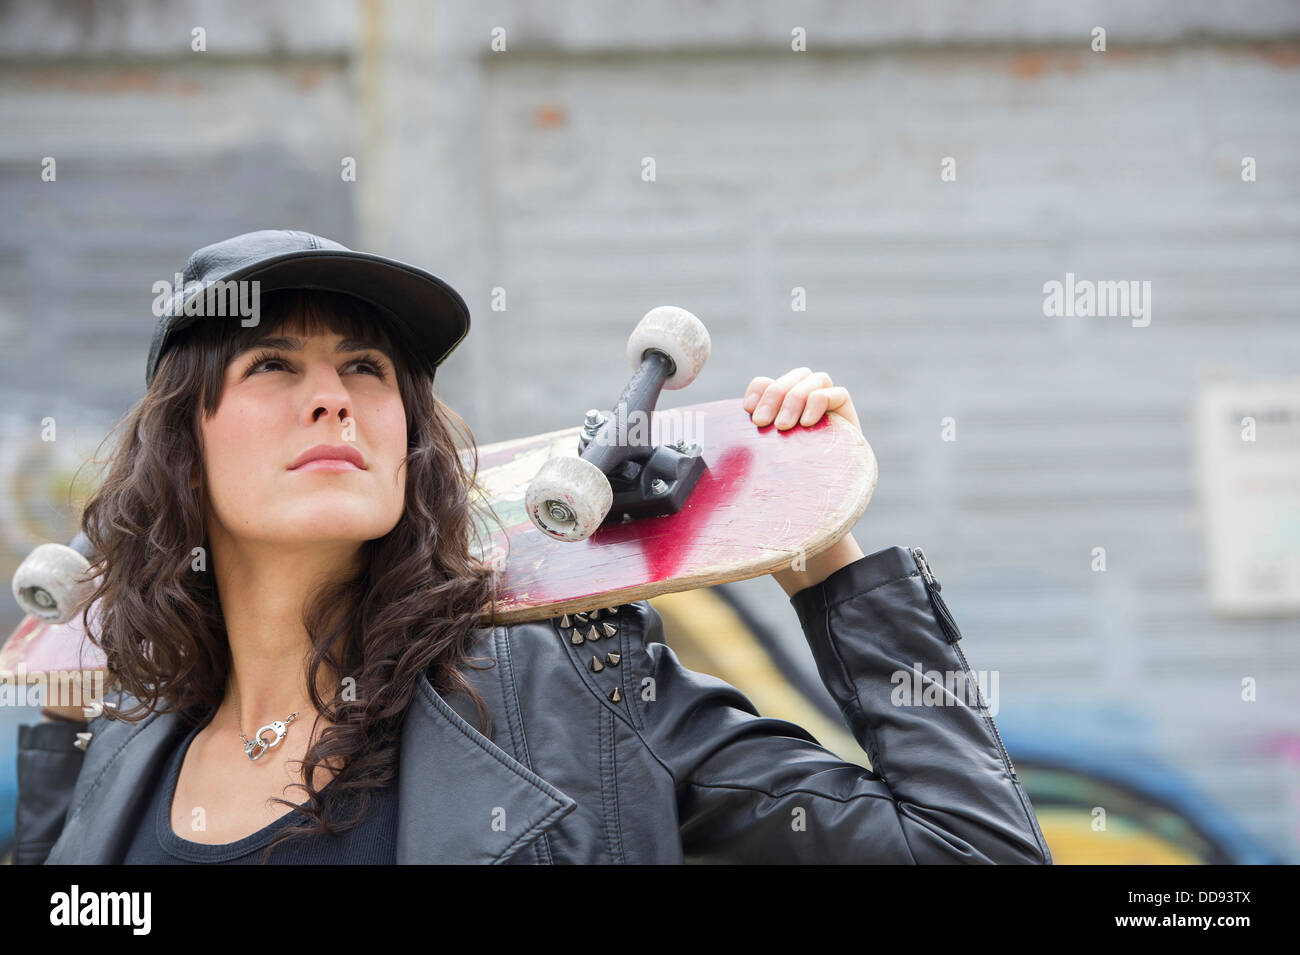 Hispanic woman holding skateboard outdoors Stock Photo